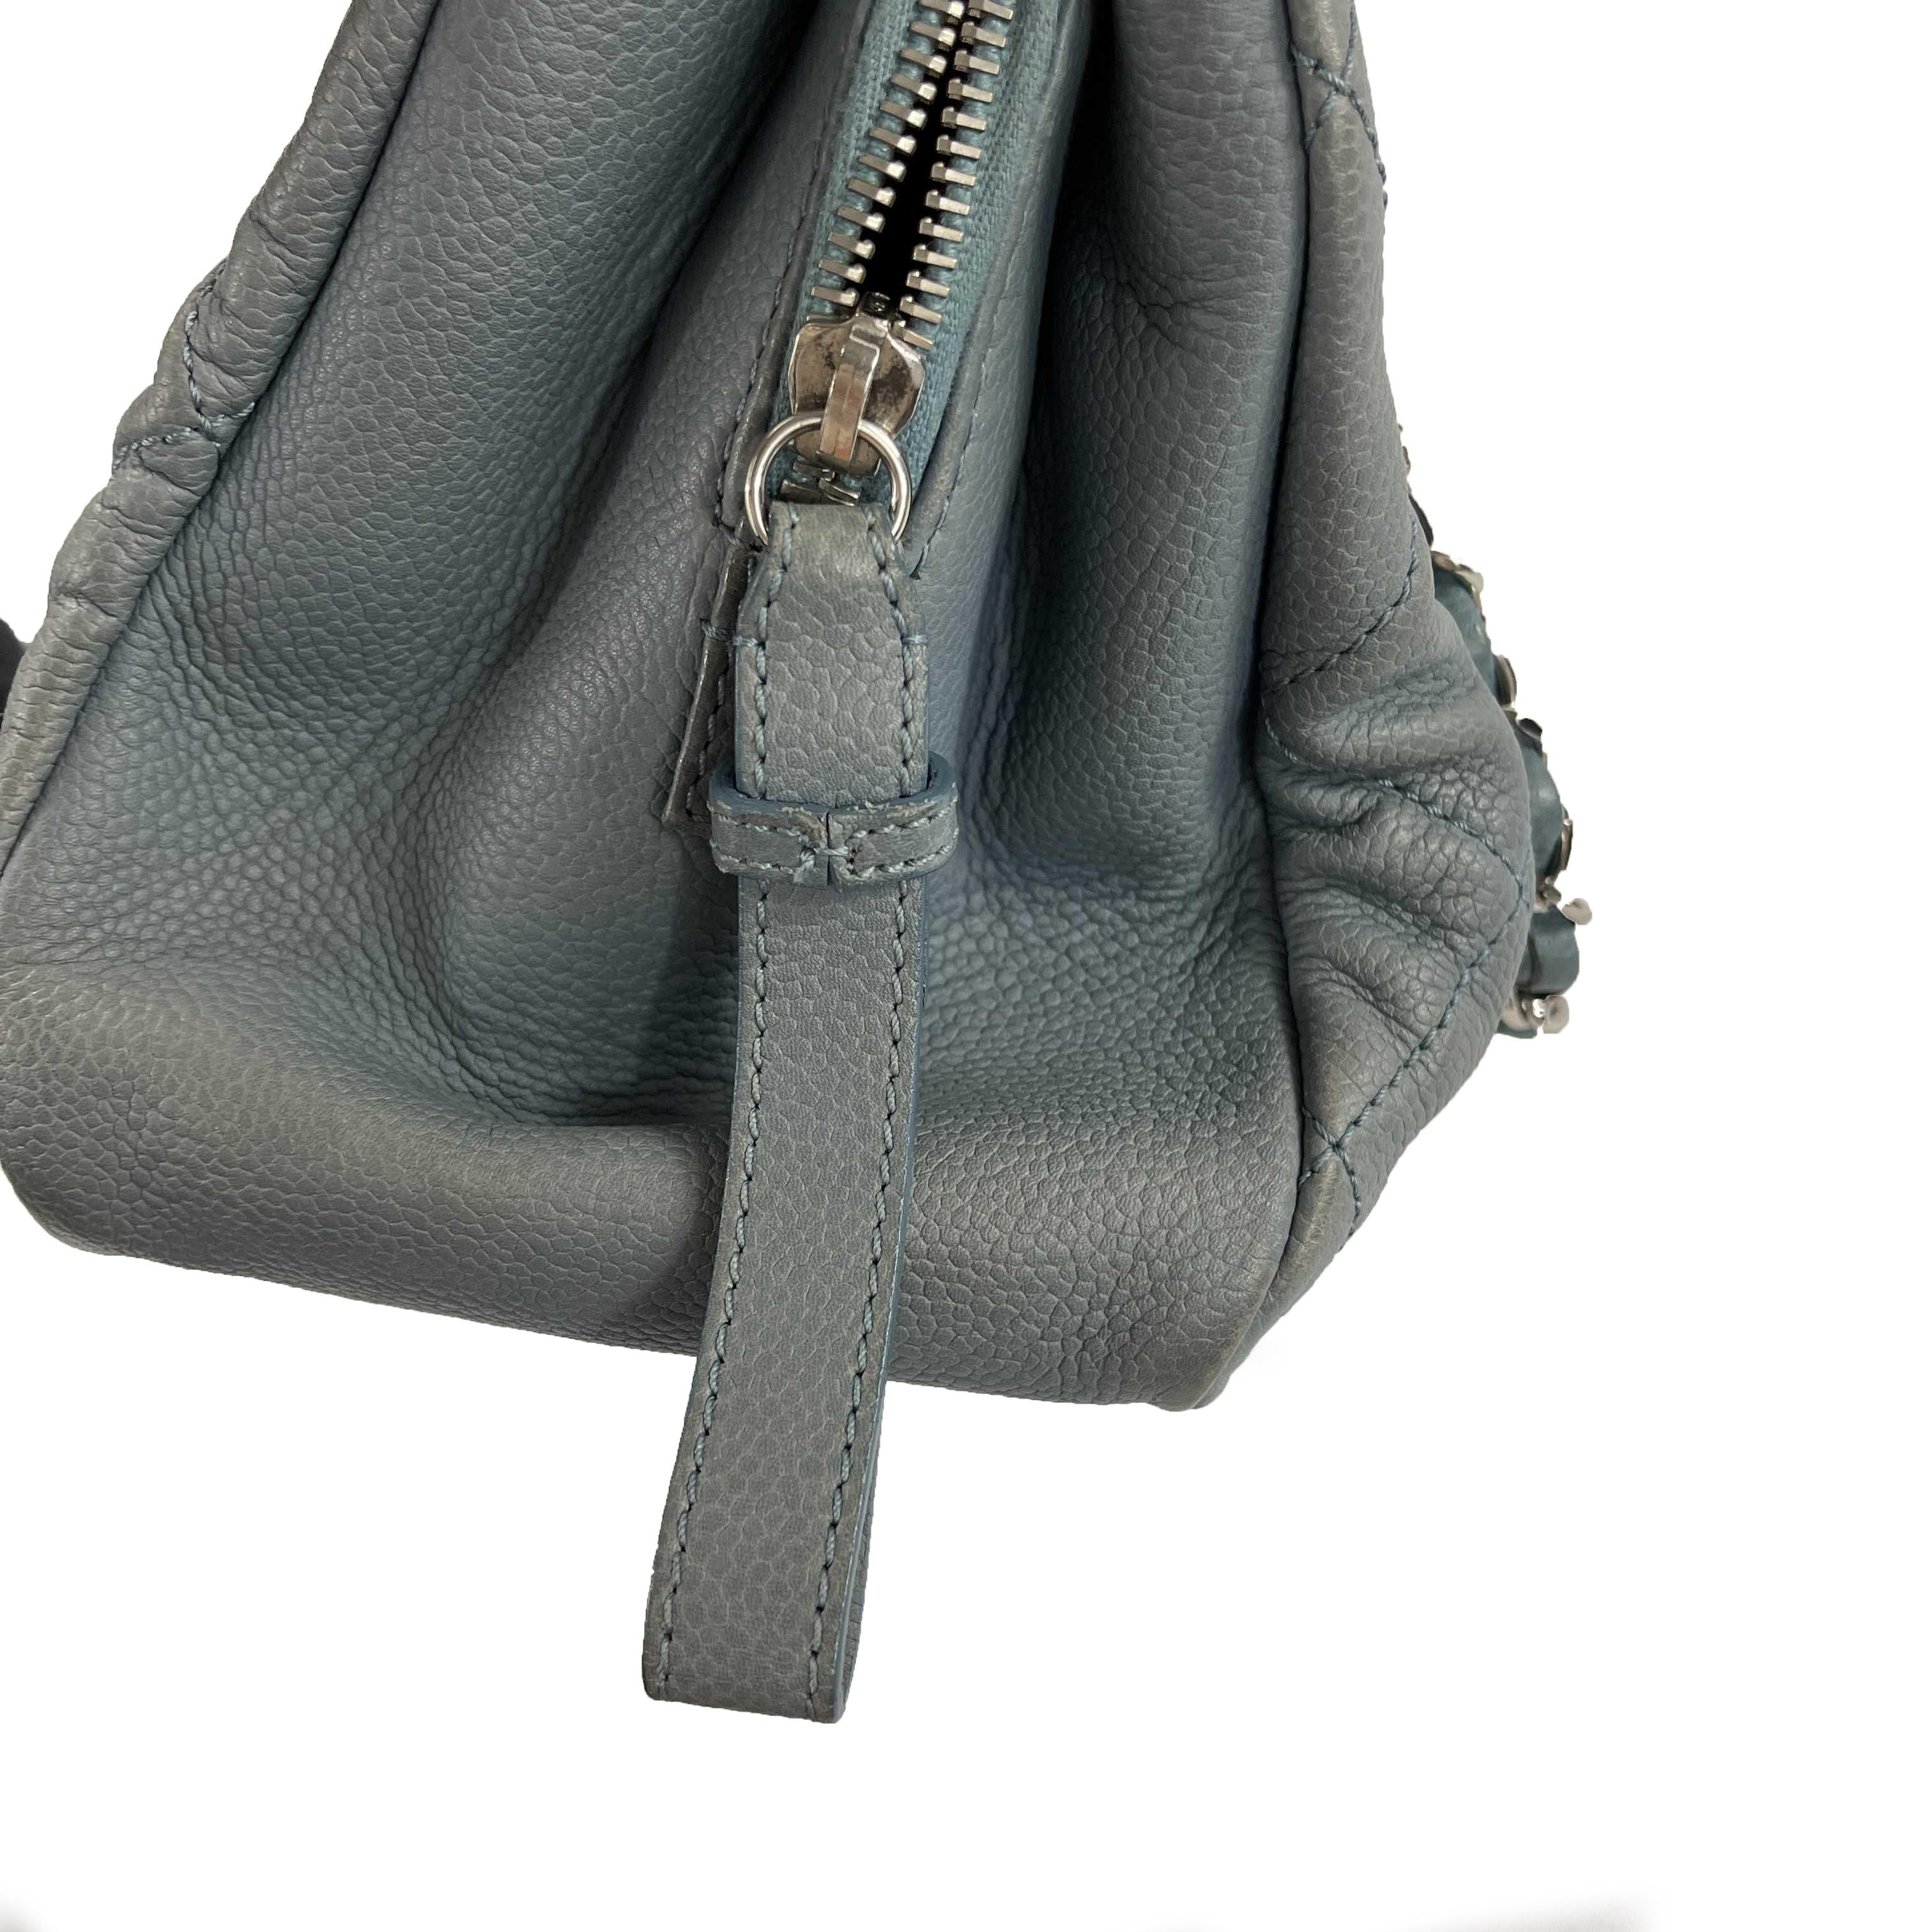 CHANEL  Seafoam / Silver CC Caviar Medium Leather Shopping Tote / Shoulder Bag In Good Condition For Sale In Sanford, FL